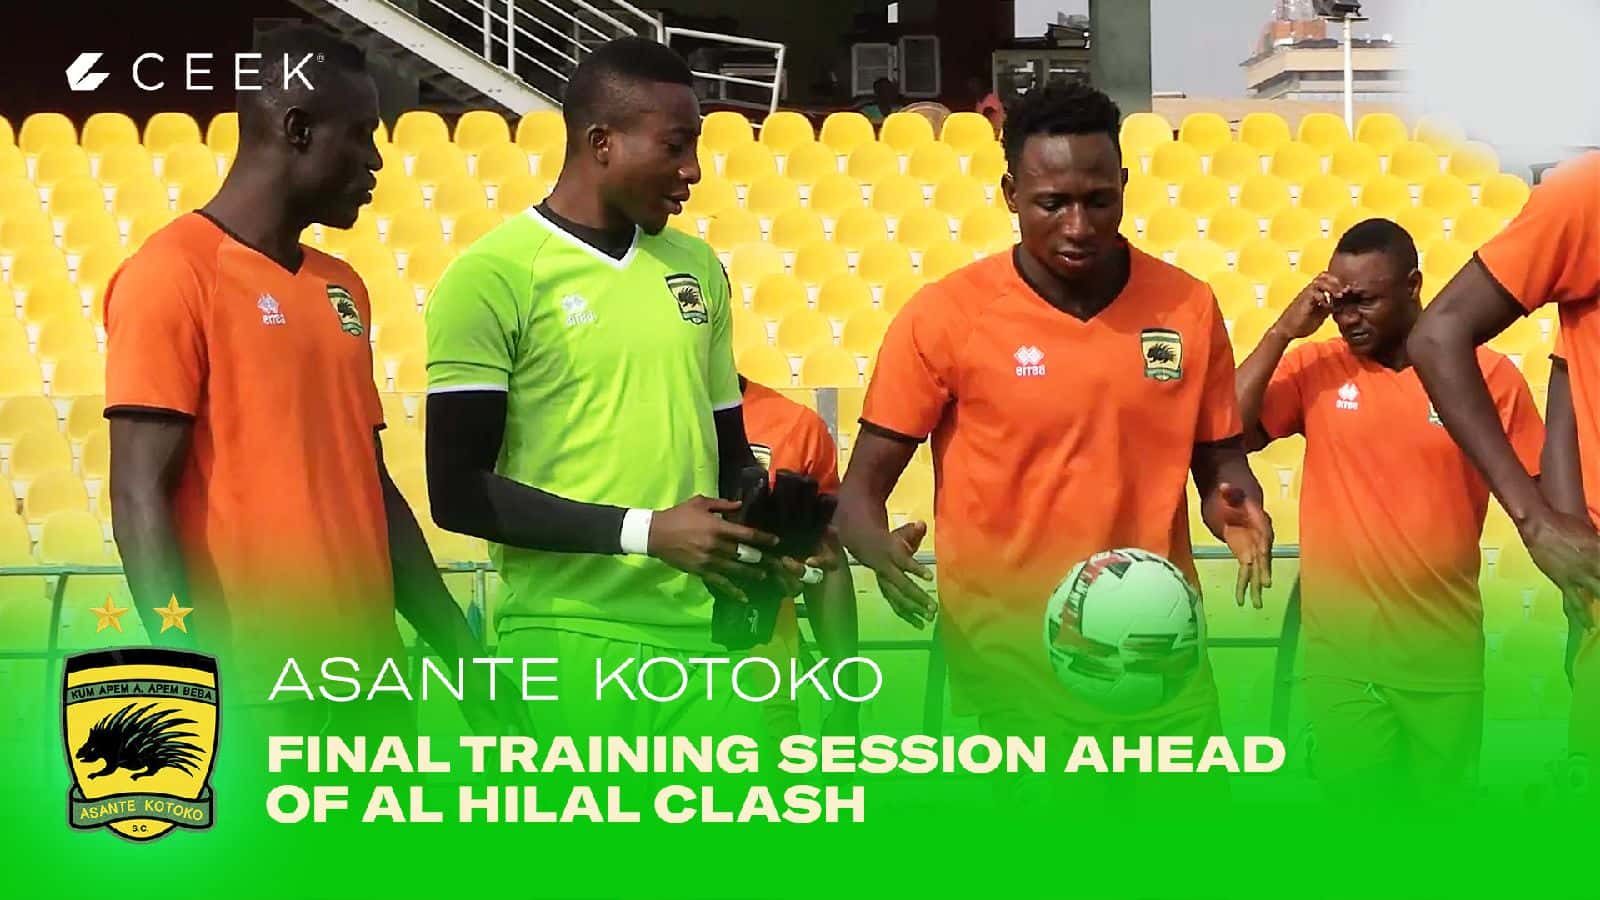 Asante Kotoko Asante Kotoko final training session ahead of Al Hilal clash